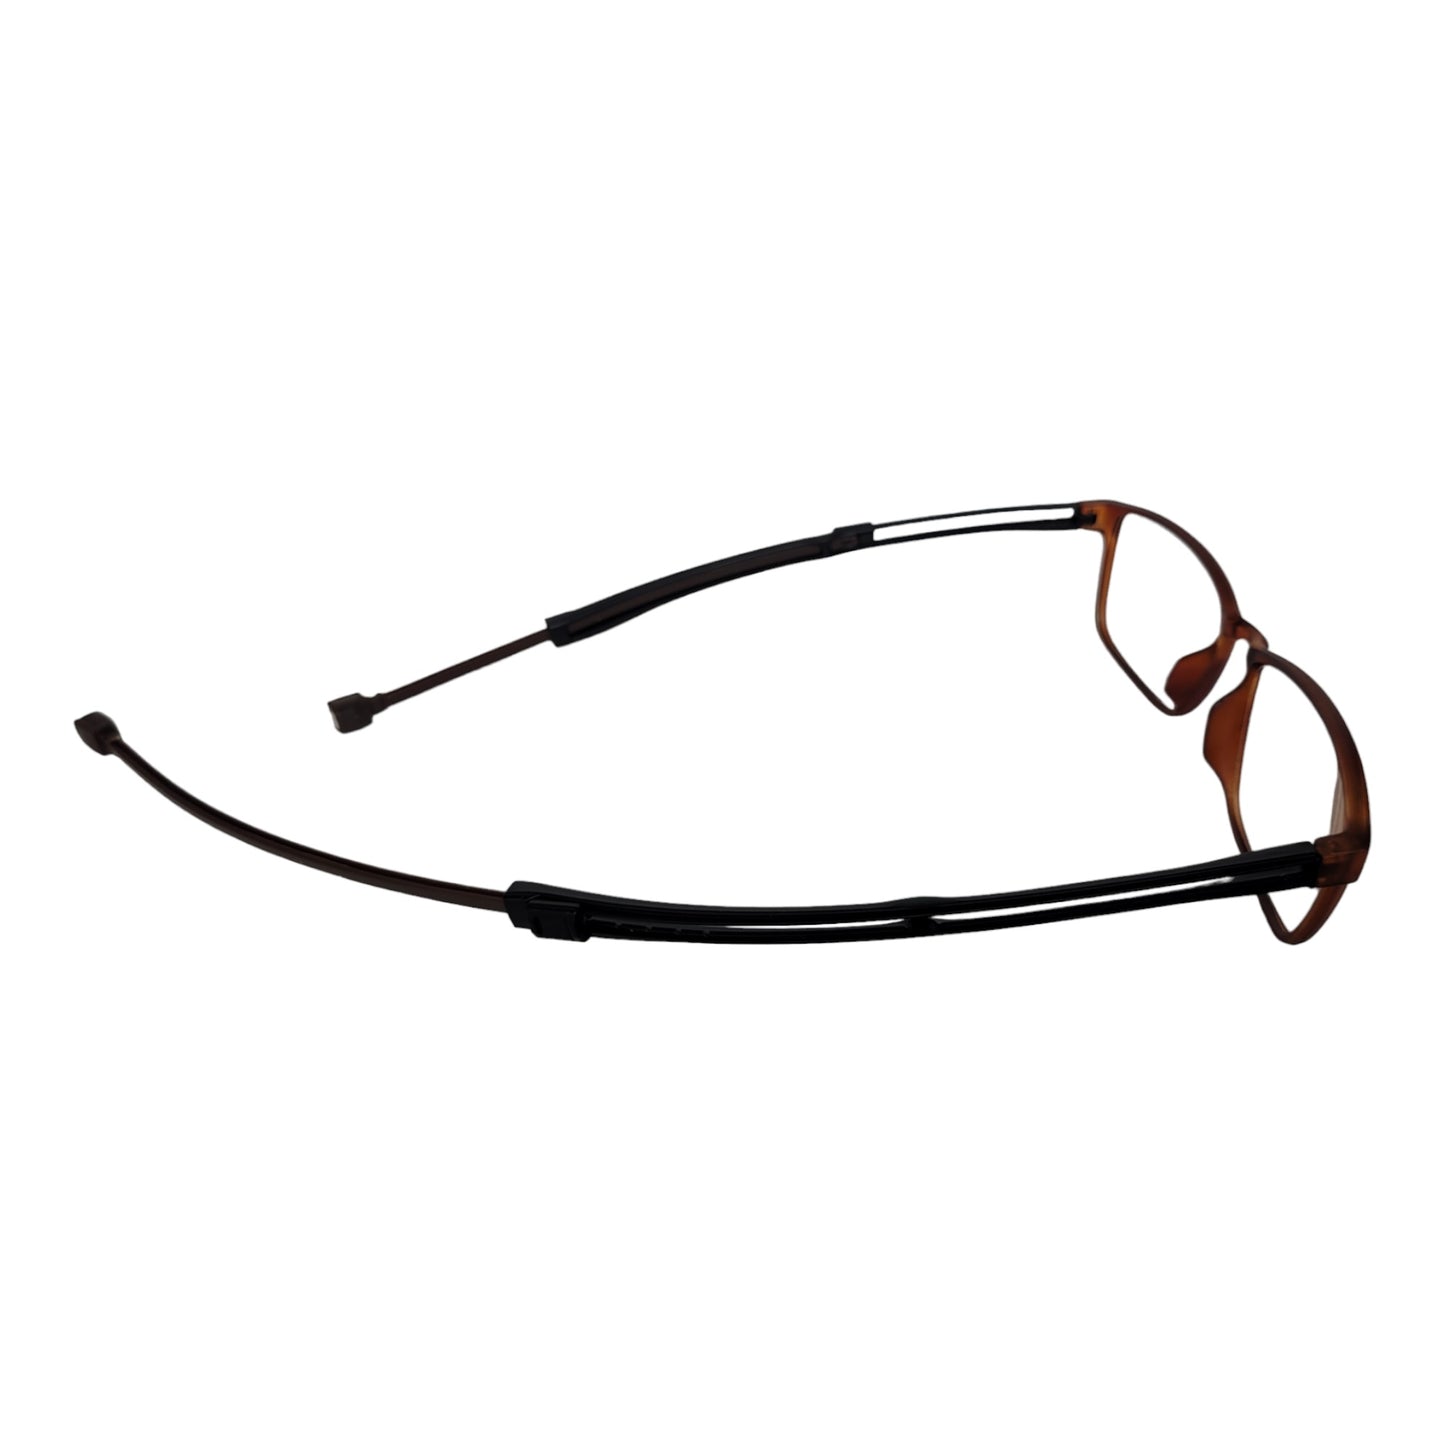 Affaires Magnetic Reading Glasses Full Rim Rectangular Unisex Spectacle Frame | Back Magnetic Connect Reader glasses | Color Brown